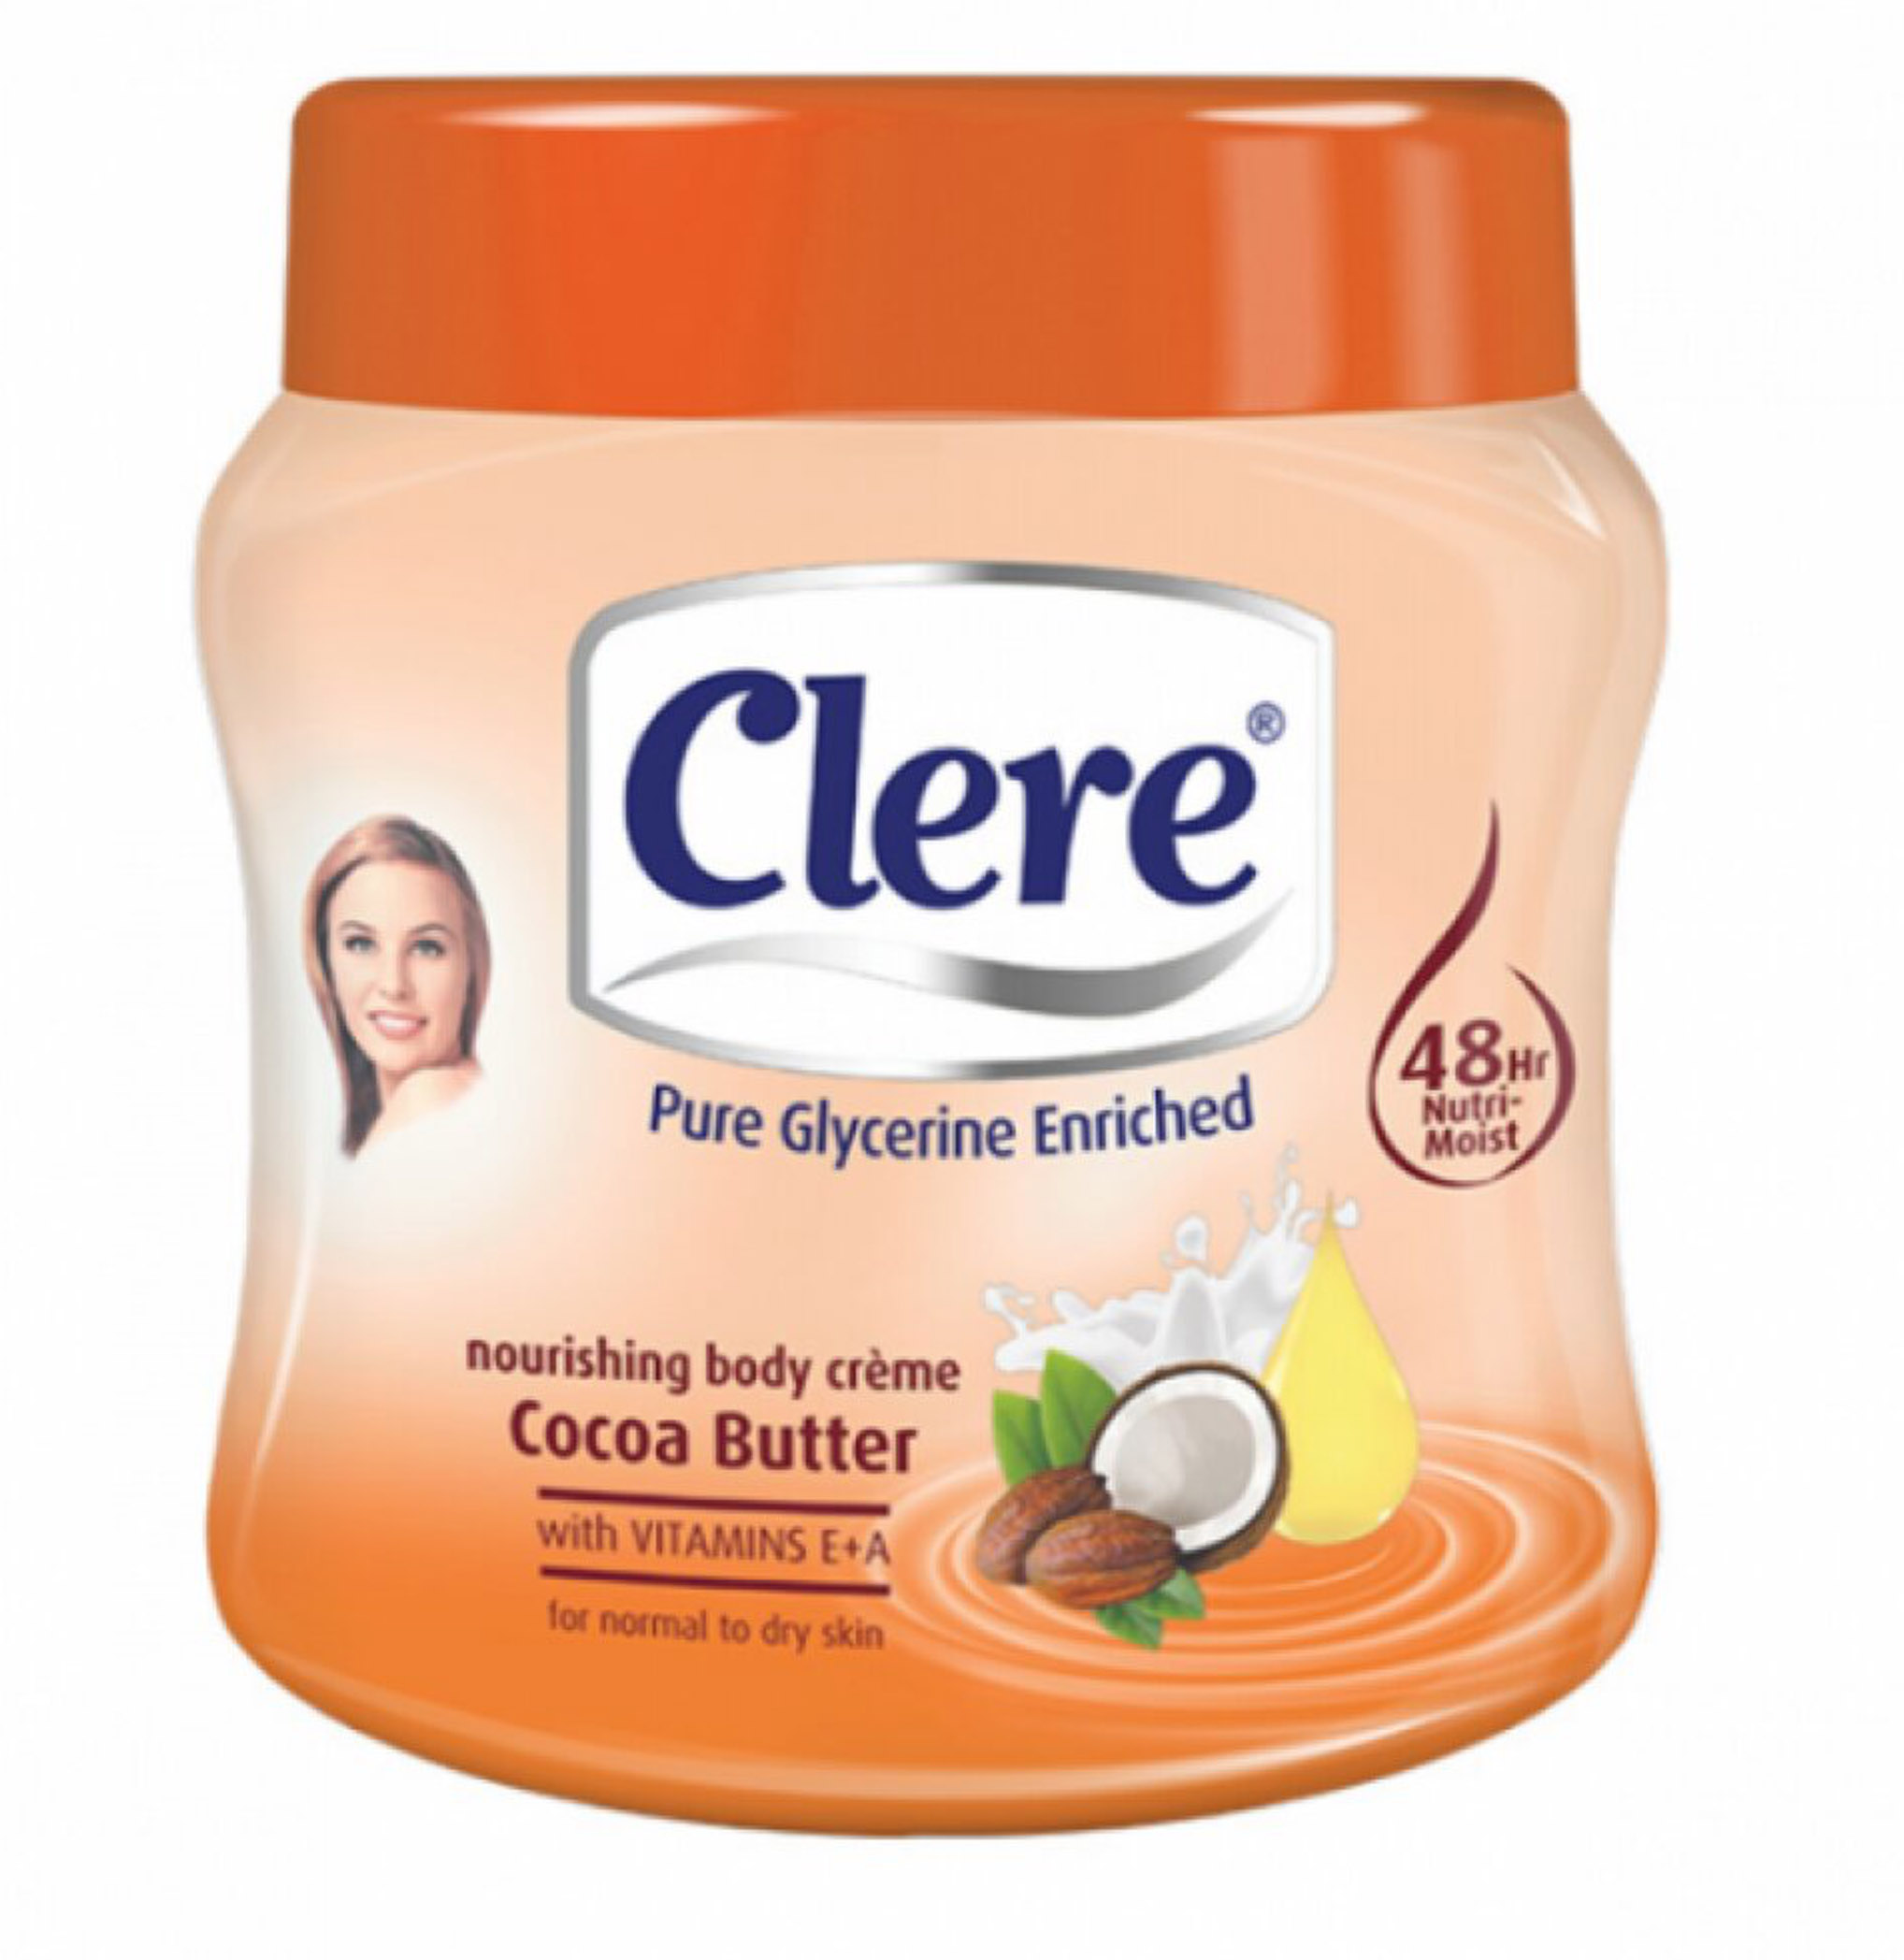 Clere Nourishing Cocoa Butter body crème